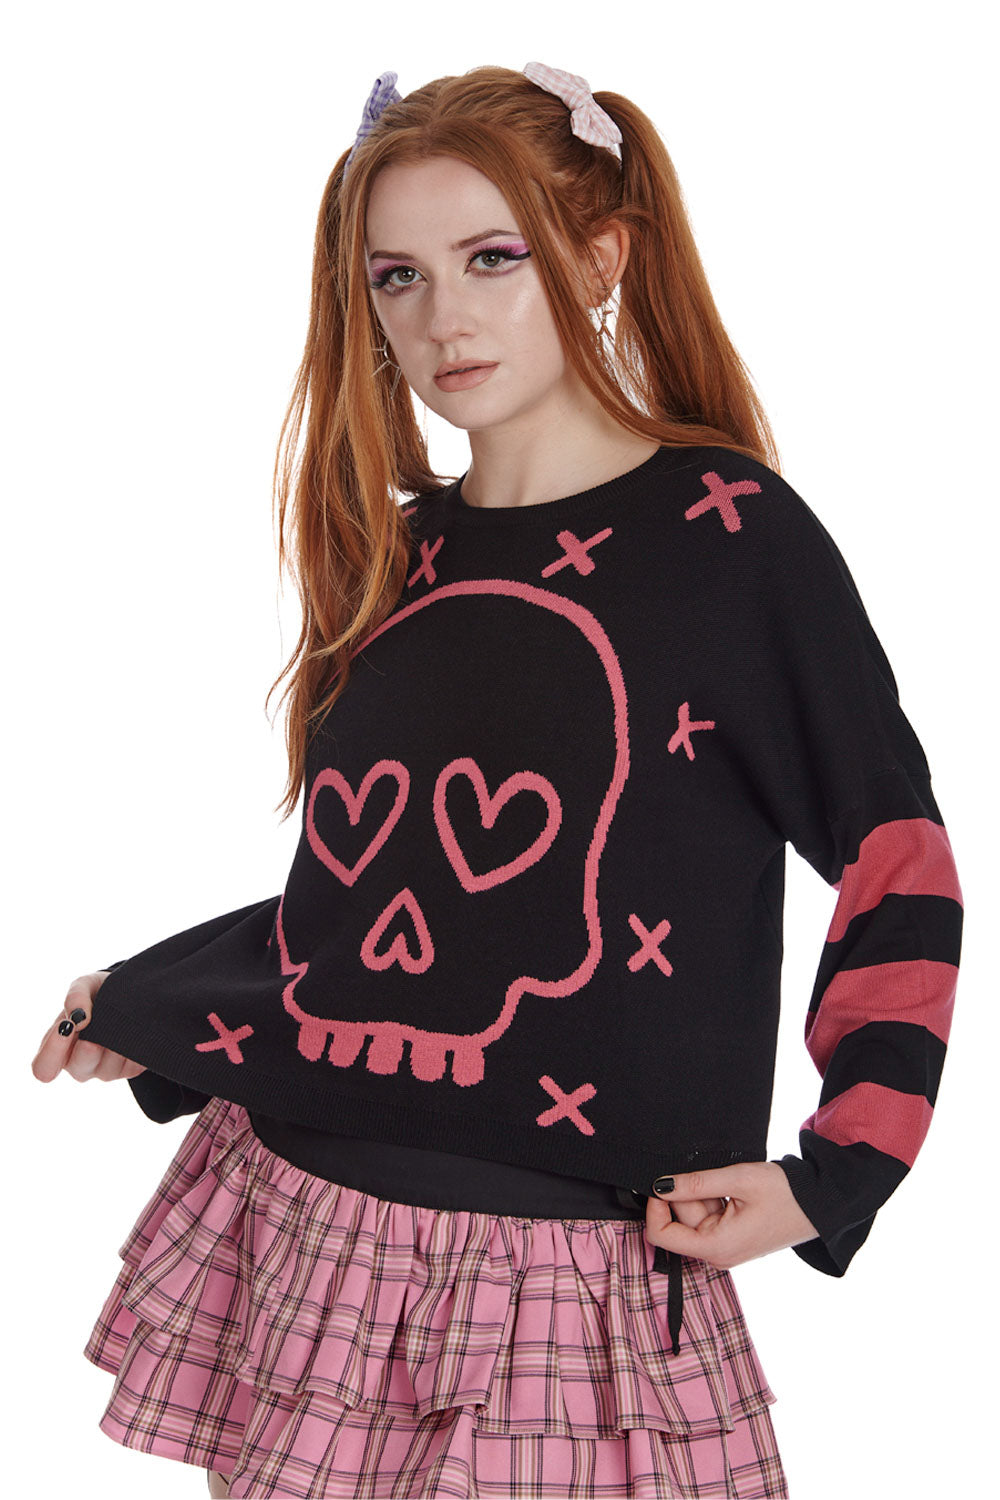 Banned Gothic Miki Knitted Love Heart Skull Jumper